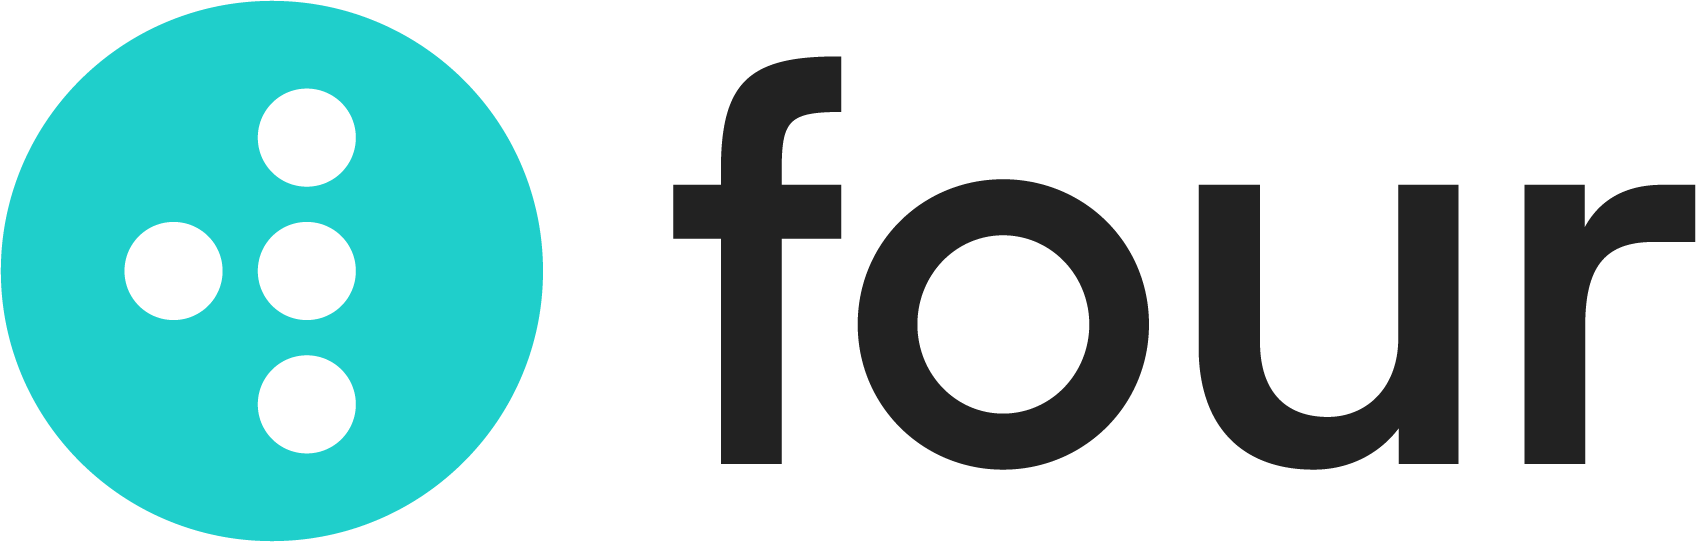 Four_Aqua_01_woodmark_logo